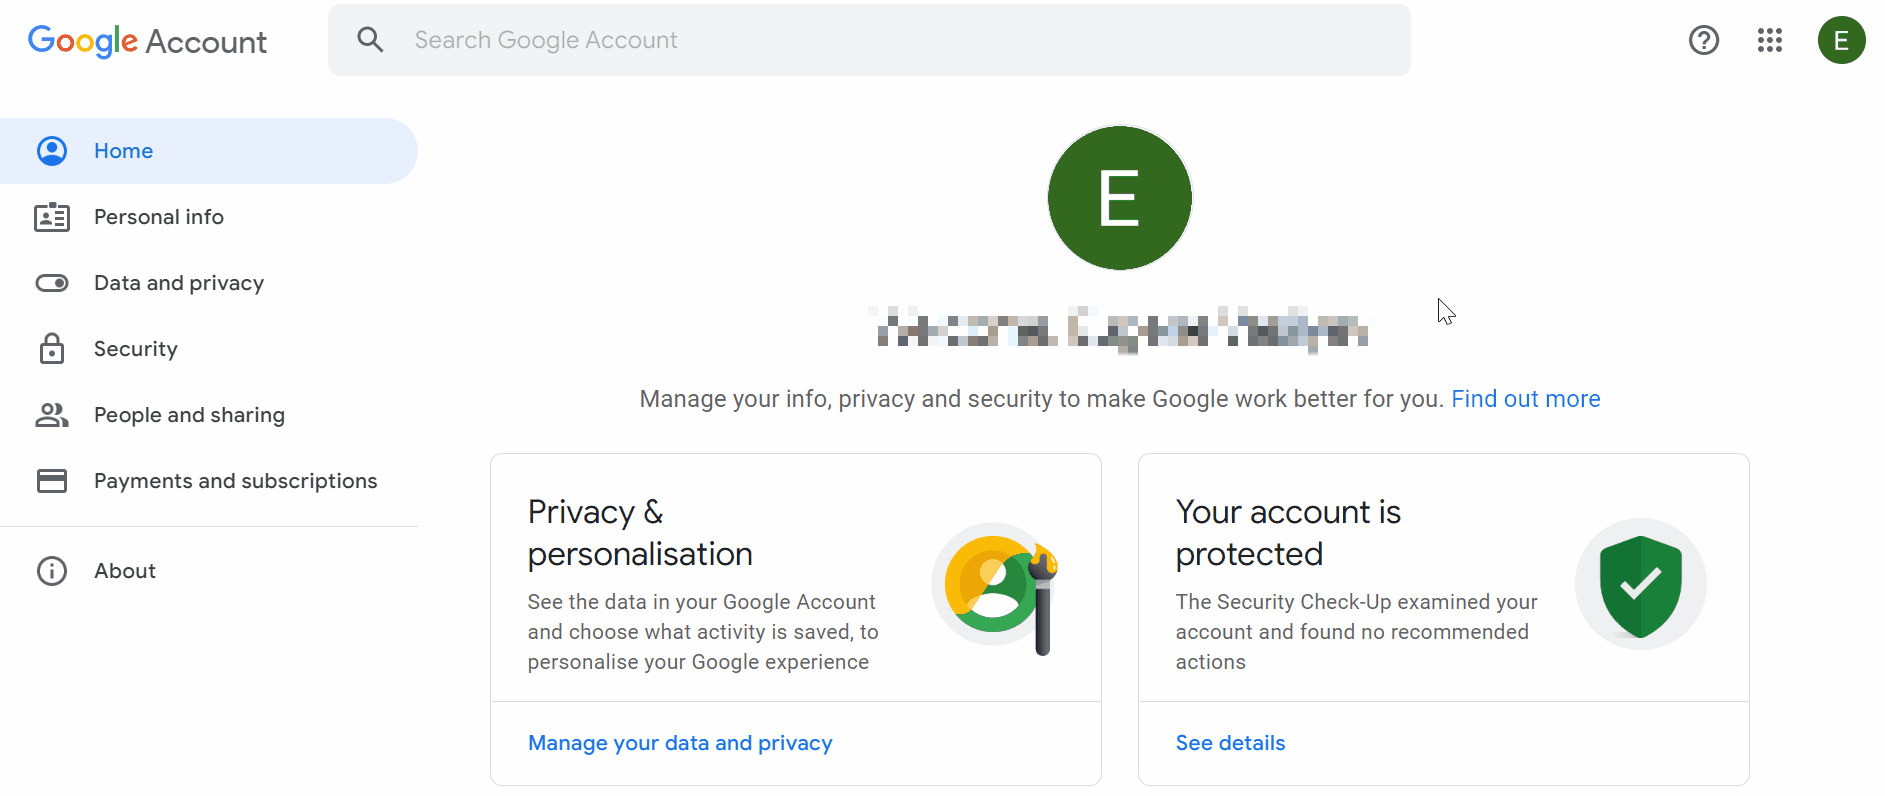 adding an avatar in Gmail